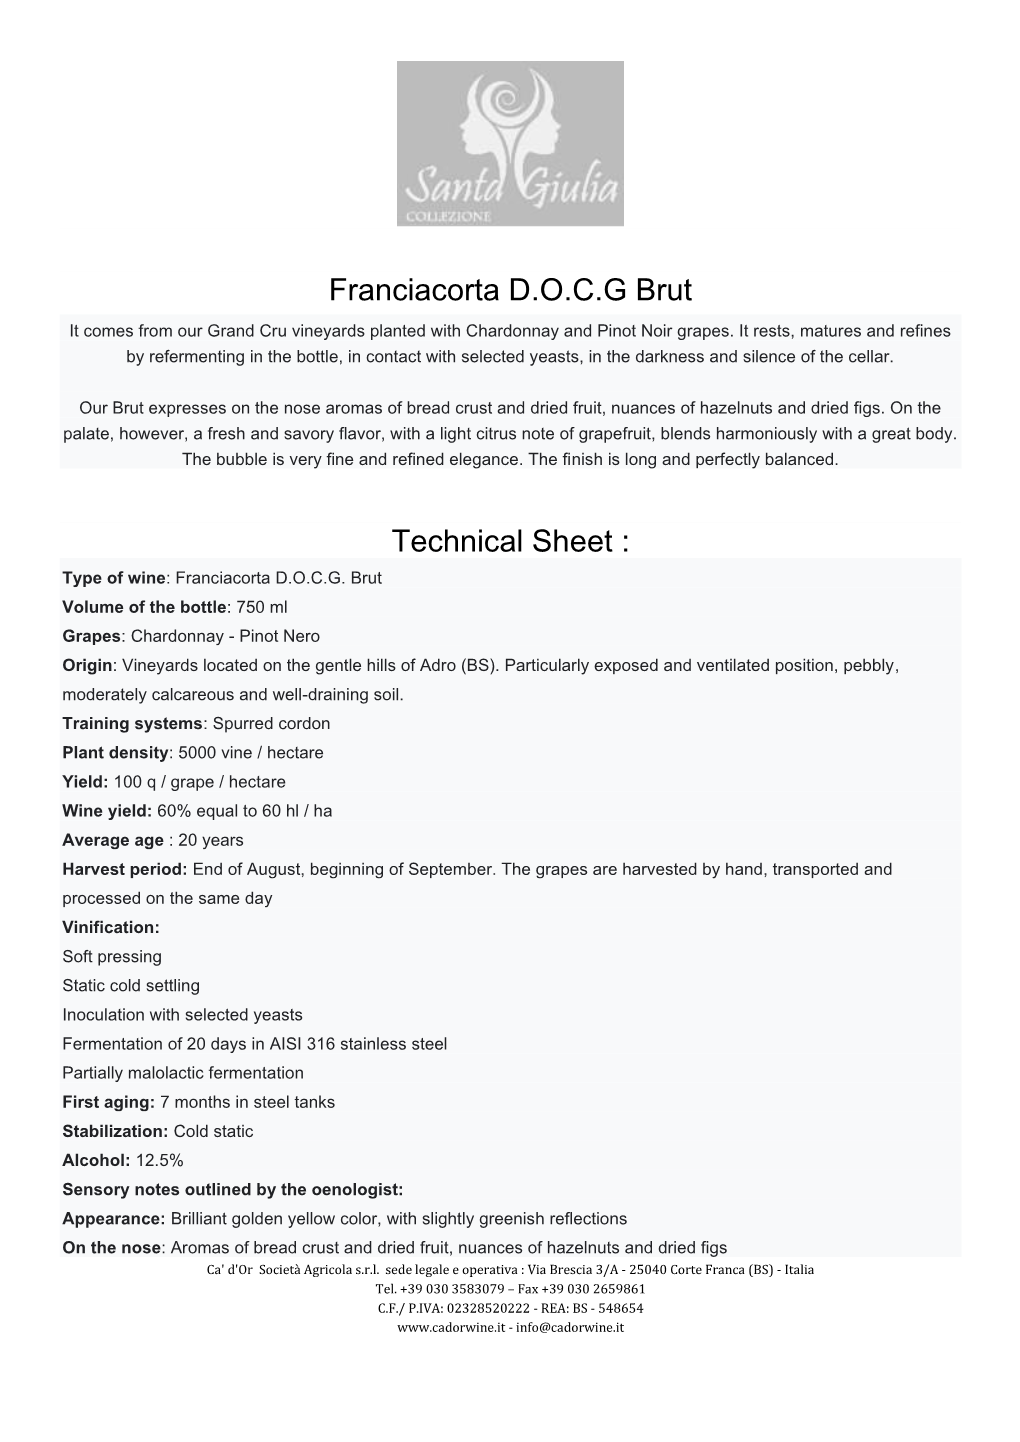 Franciacorta D.O.C.G Brut Technical Sheet